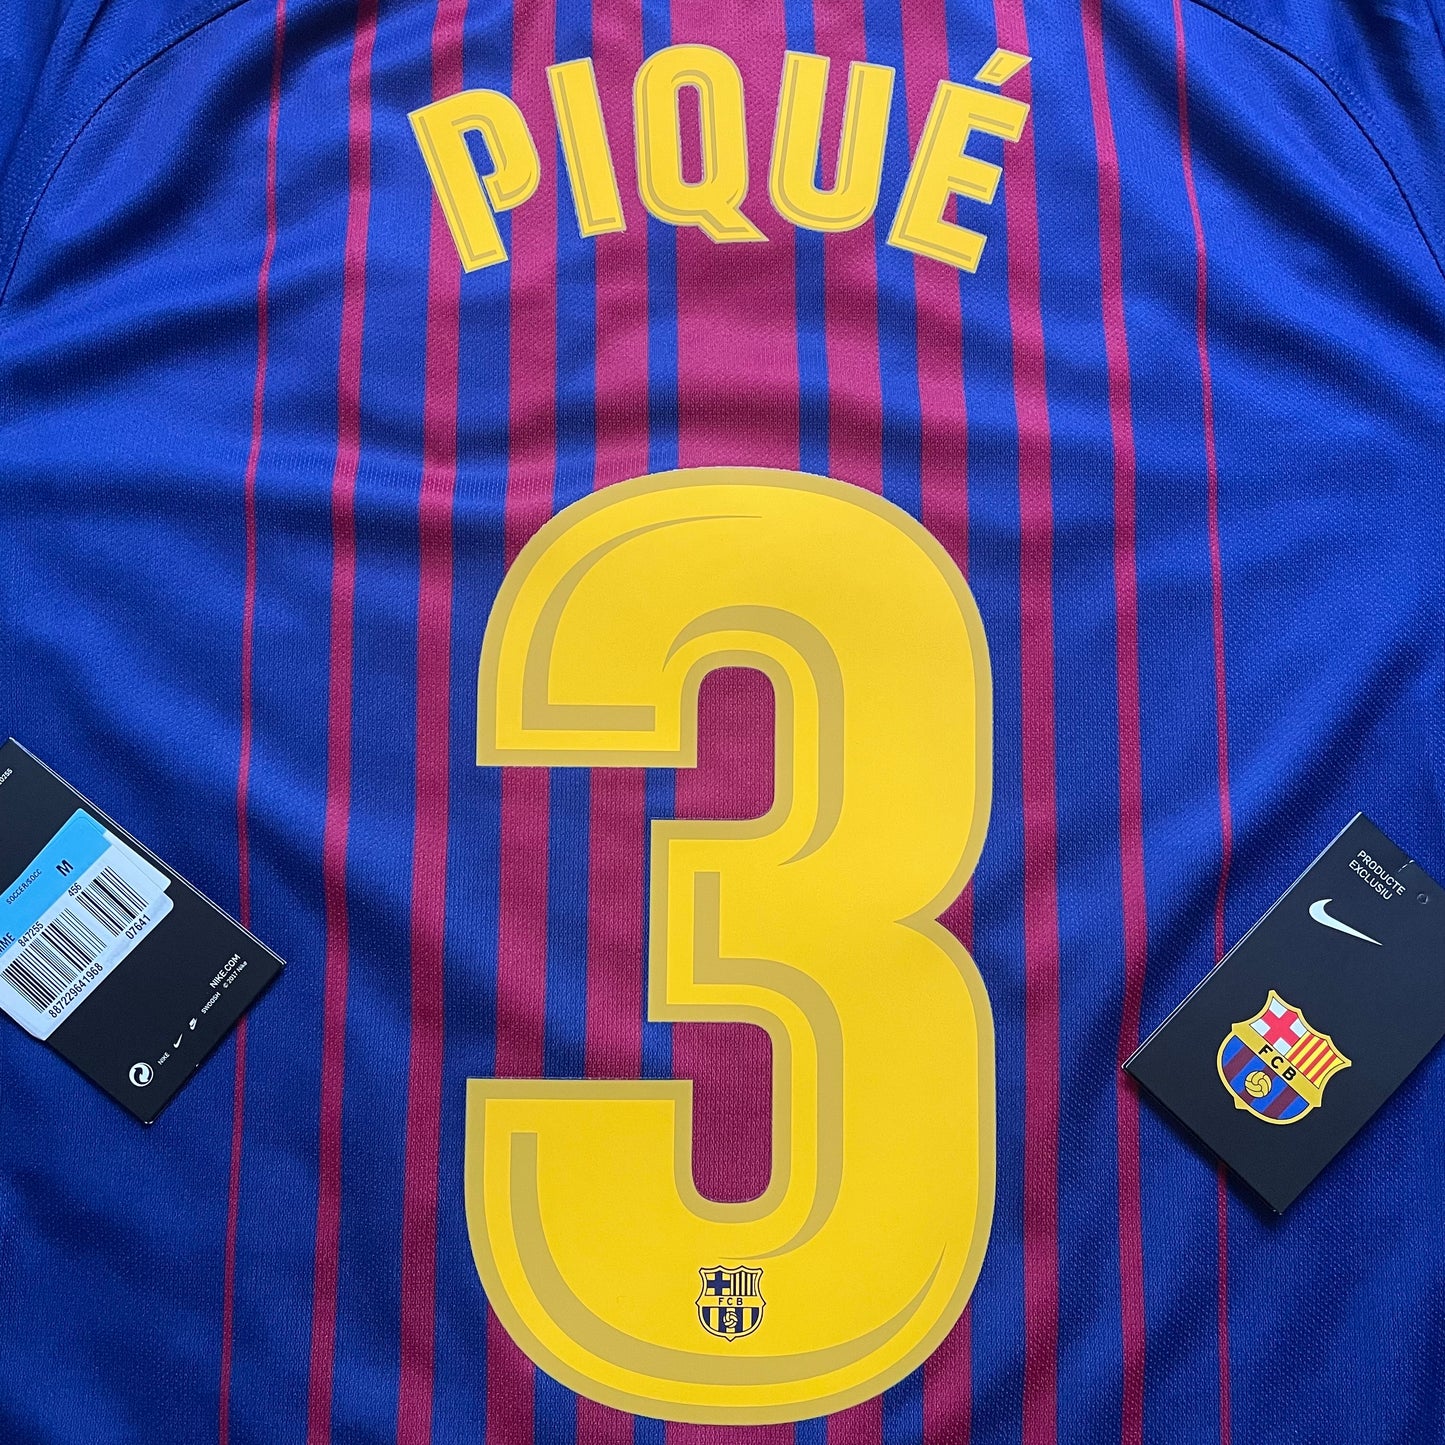 2017-2018 FC Barcelona home shirt #3 Piqué (M, XL)